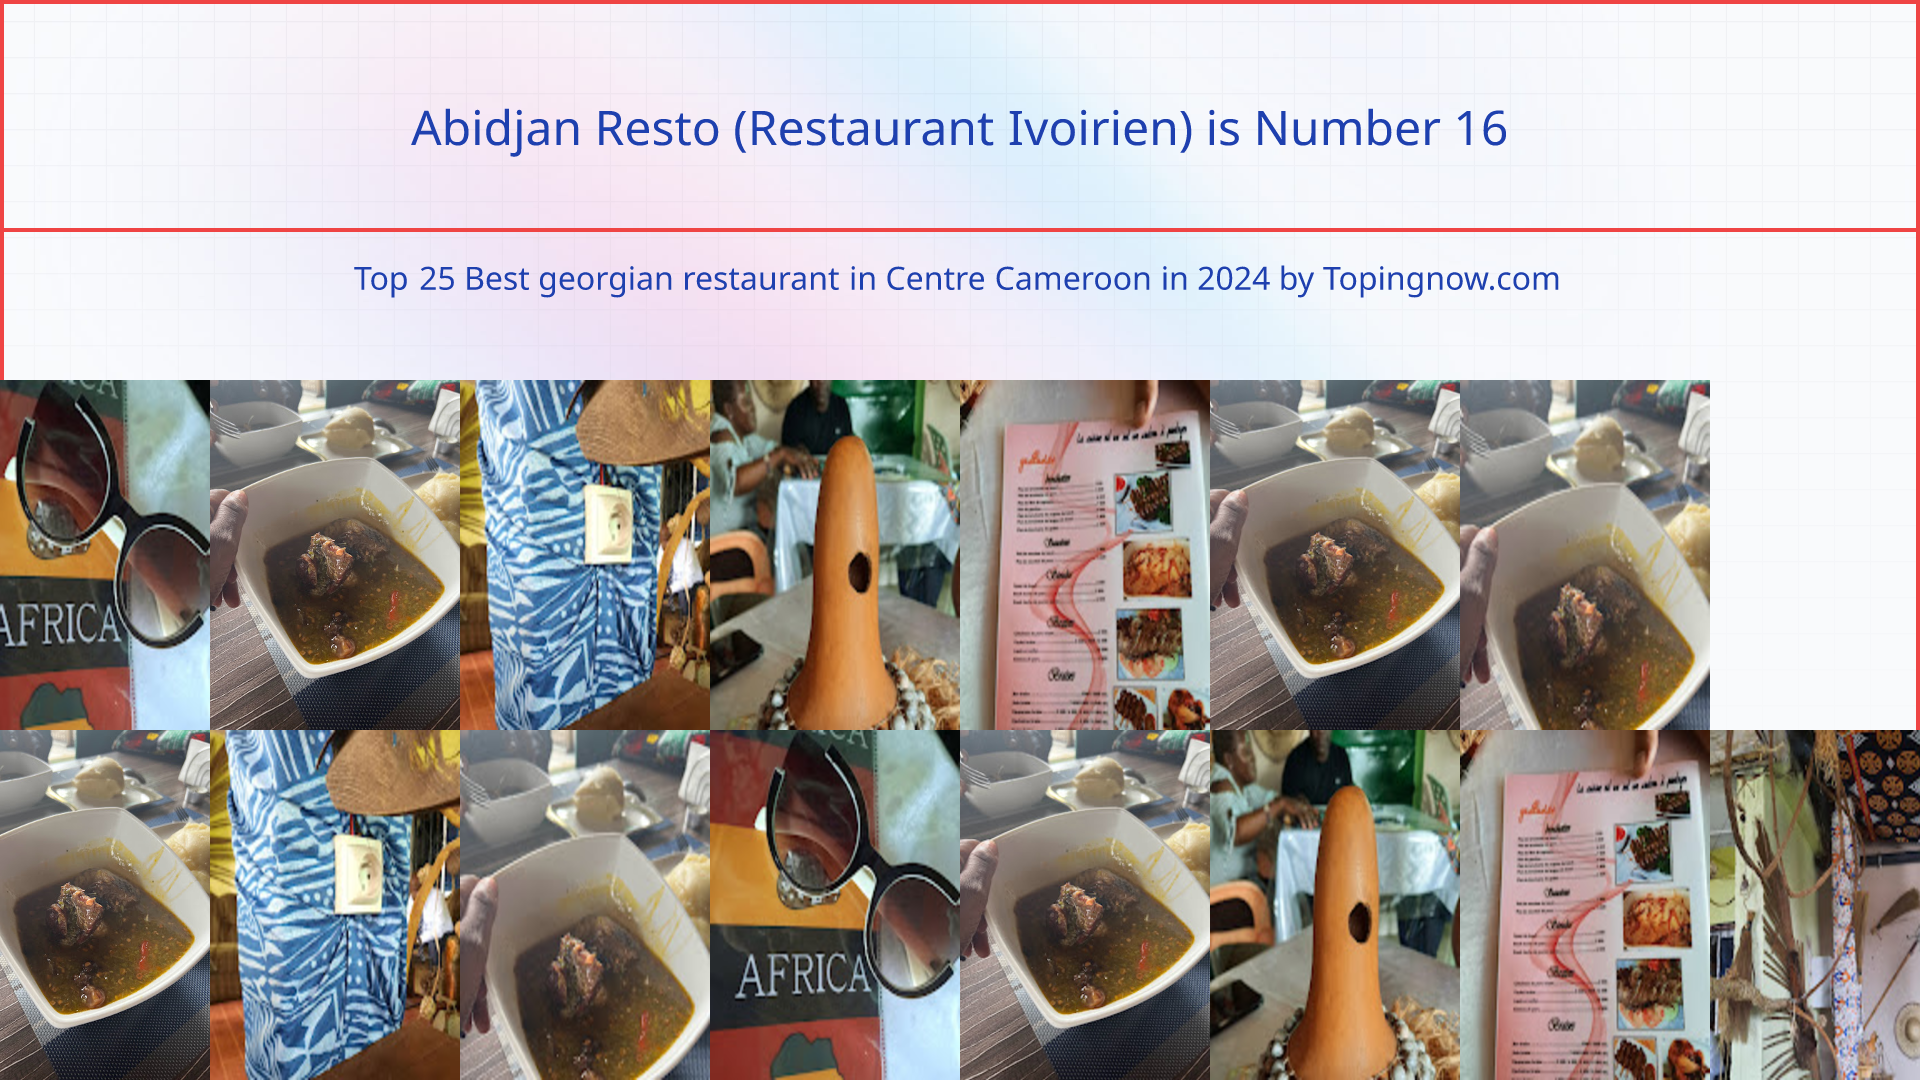 Abidjan Resto (Restaurant Ivoirien): Top 25 Best georgian restaurant in Centre Cameroon in 2024